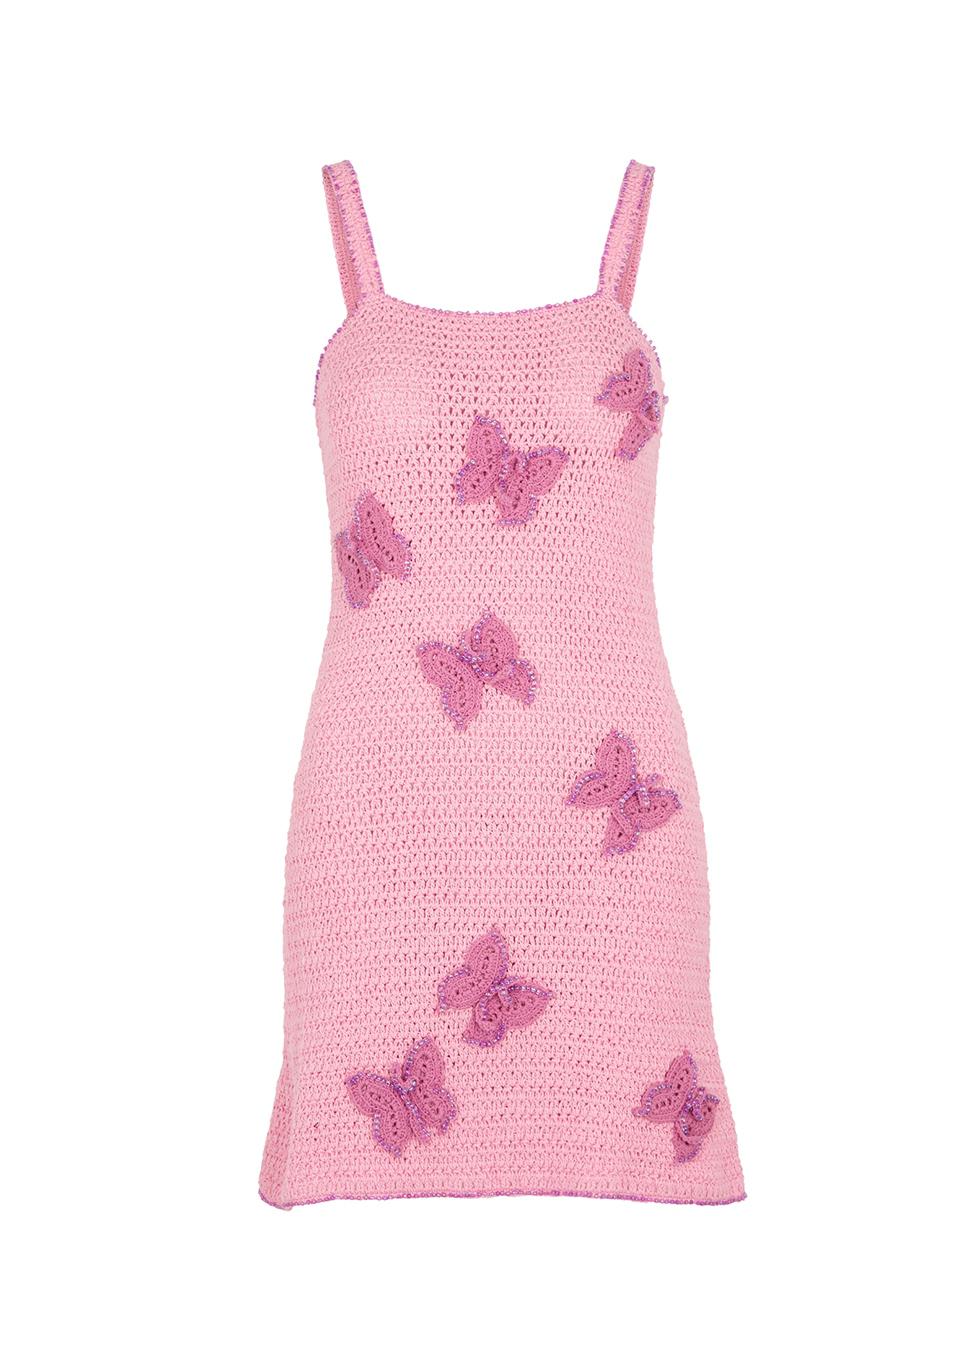 Beaded Butterfly pink crochet mini dress by CRO-CHE